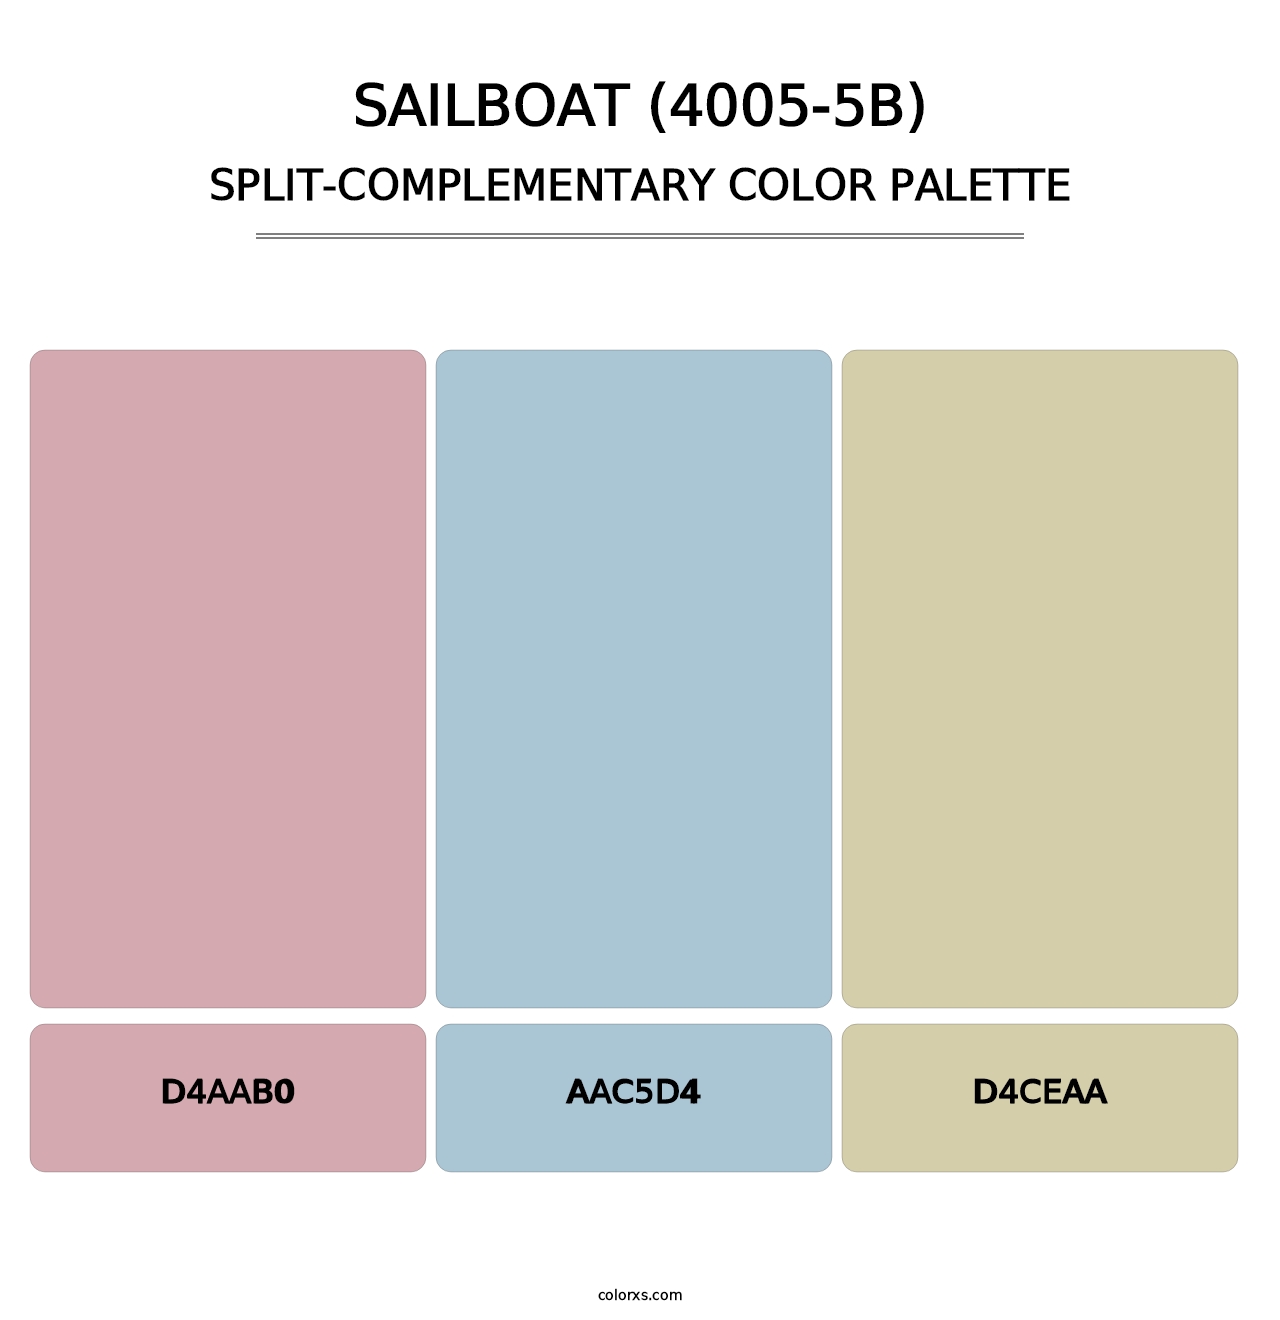 Sailboat (4005-5B) - Split-Complementary Color Palette